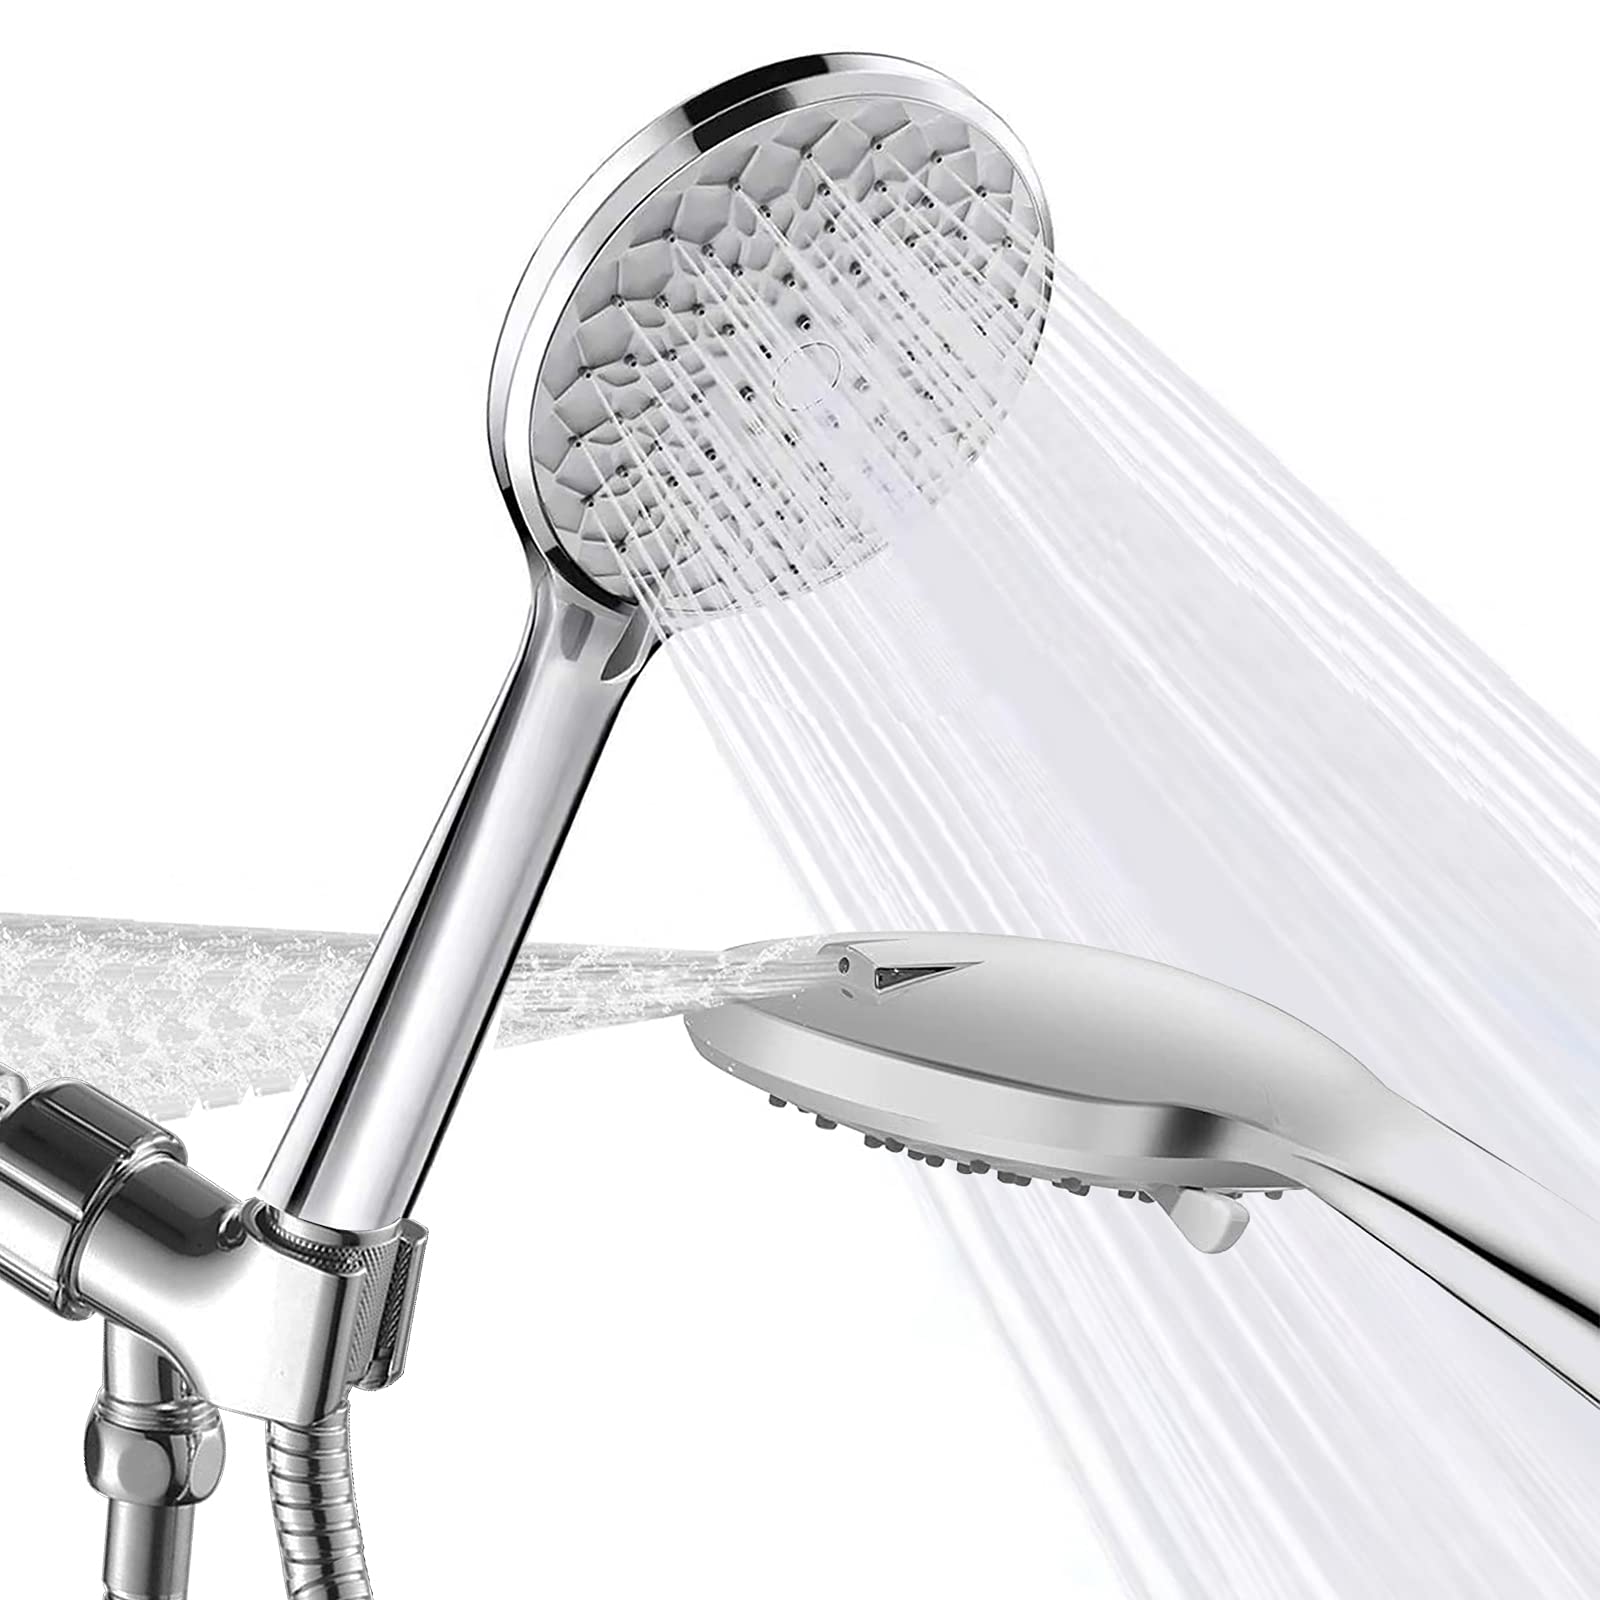 Universal 3 mode Function Chrome Handheld Home Bathroom Shower Head Water Part